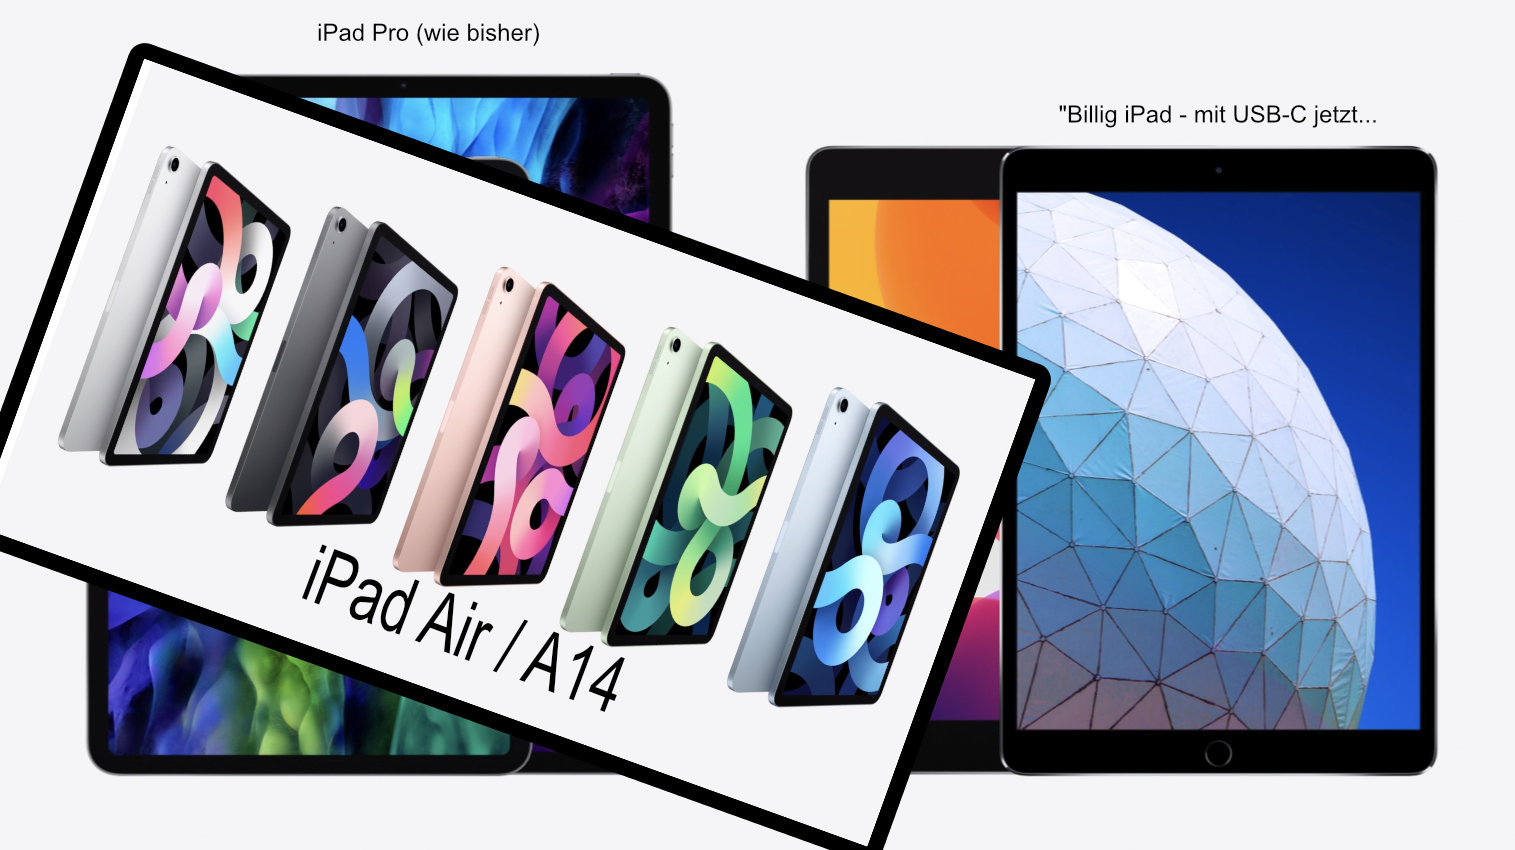 Musiker iPad Air mit A14 Prozessor - Billig iPad mit alter Technik und